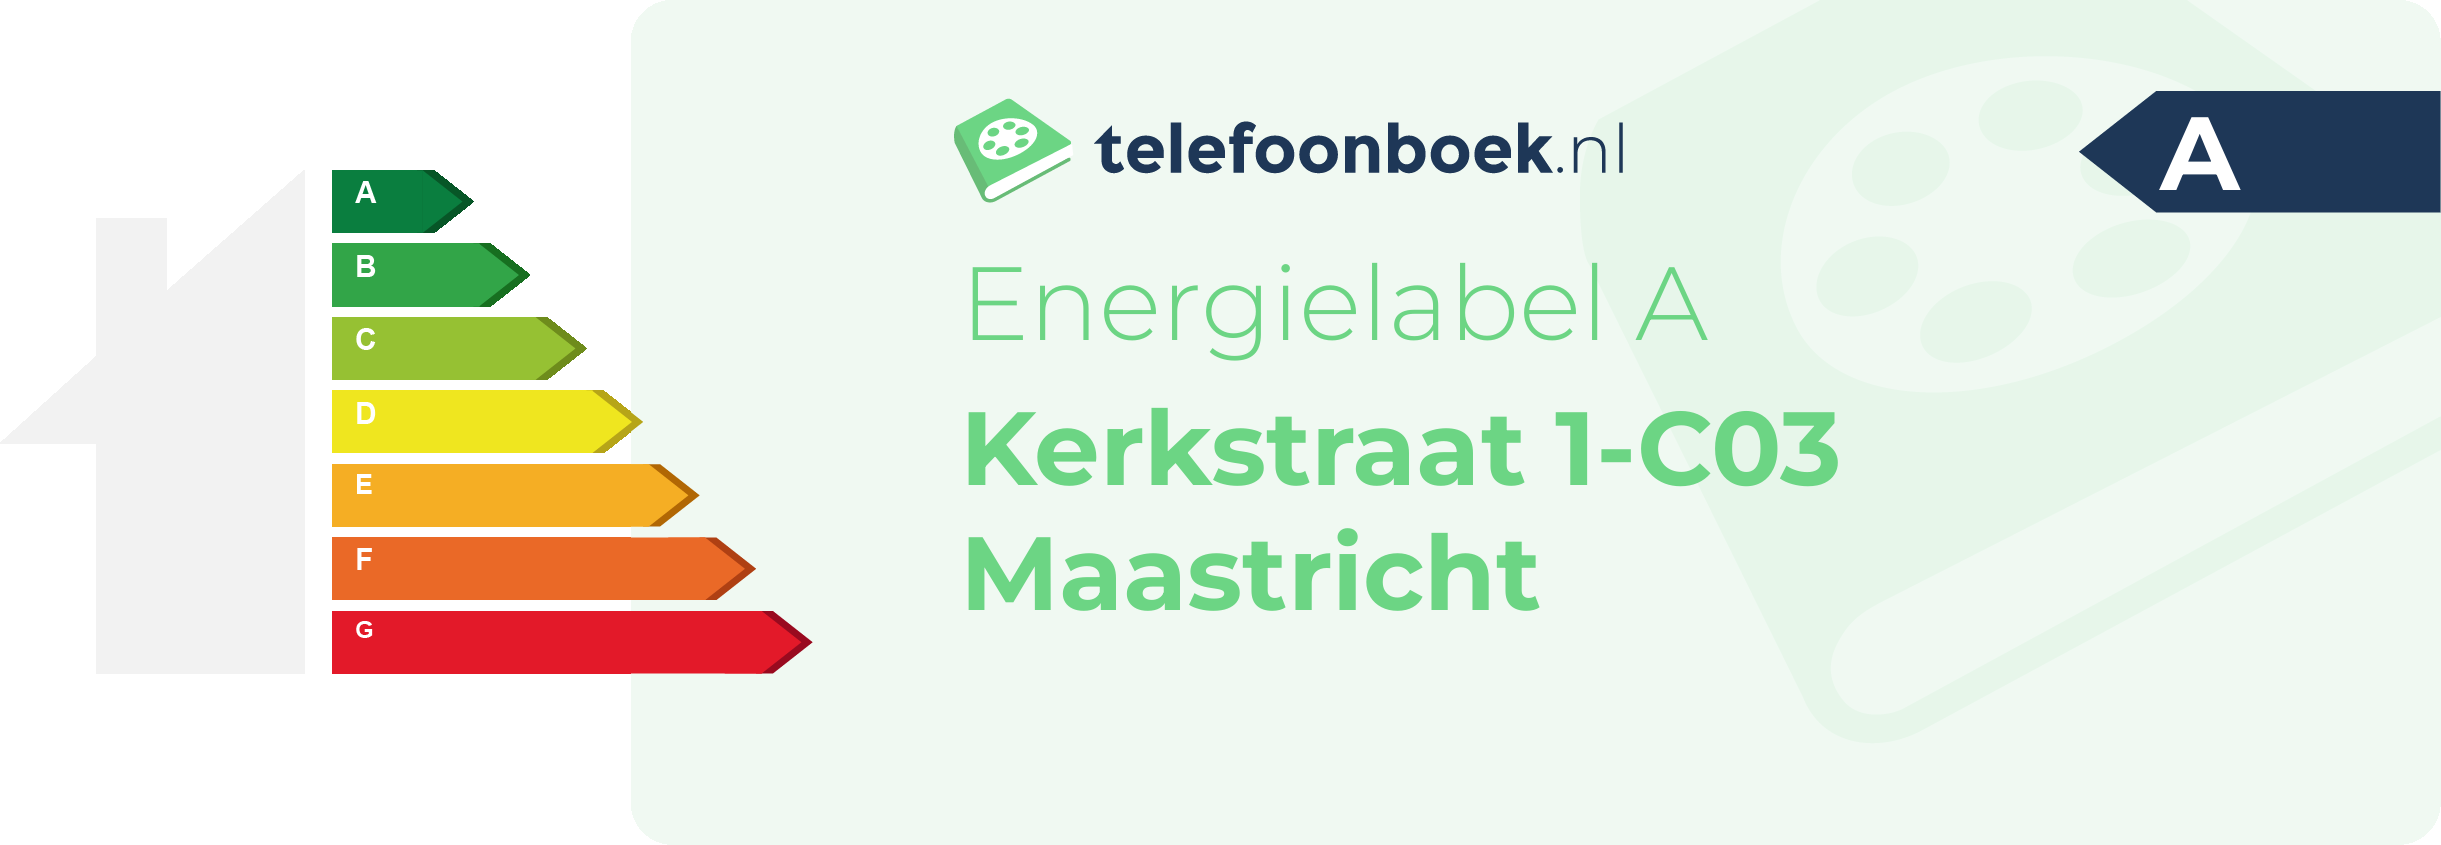 Energielabel Kerkstraat 1-C03 Maastricht